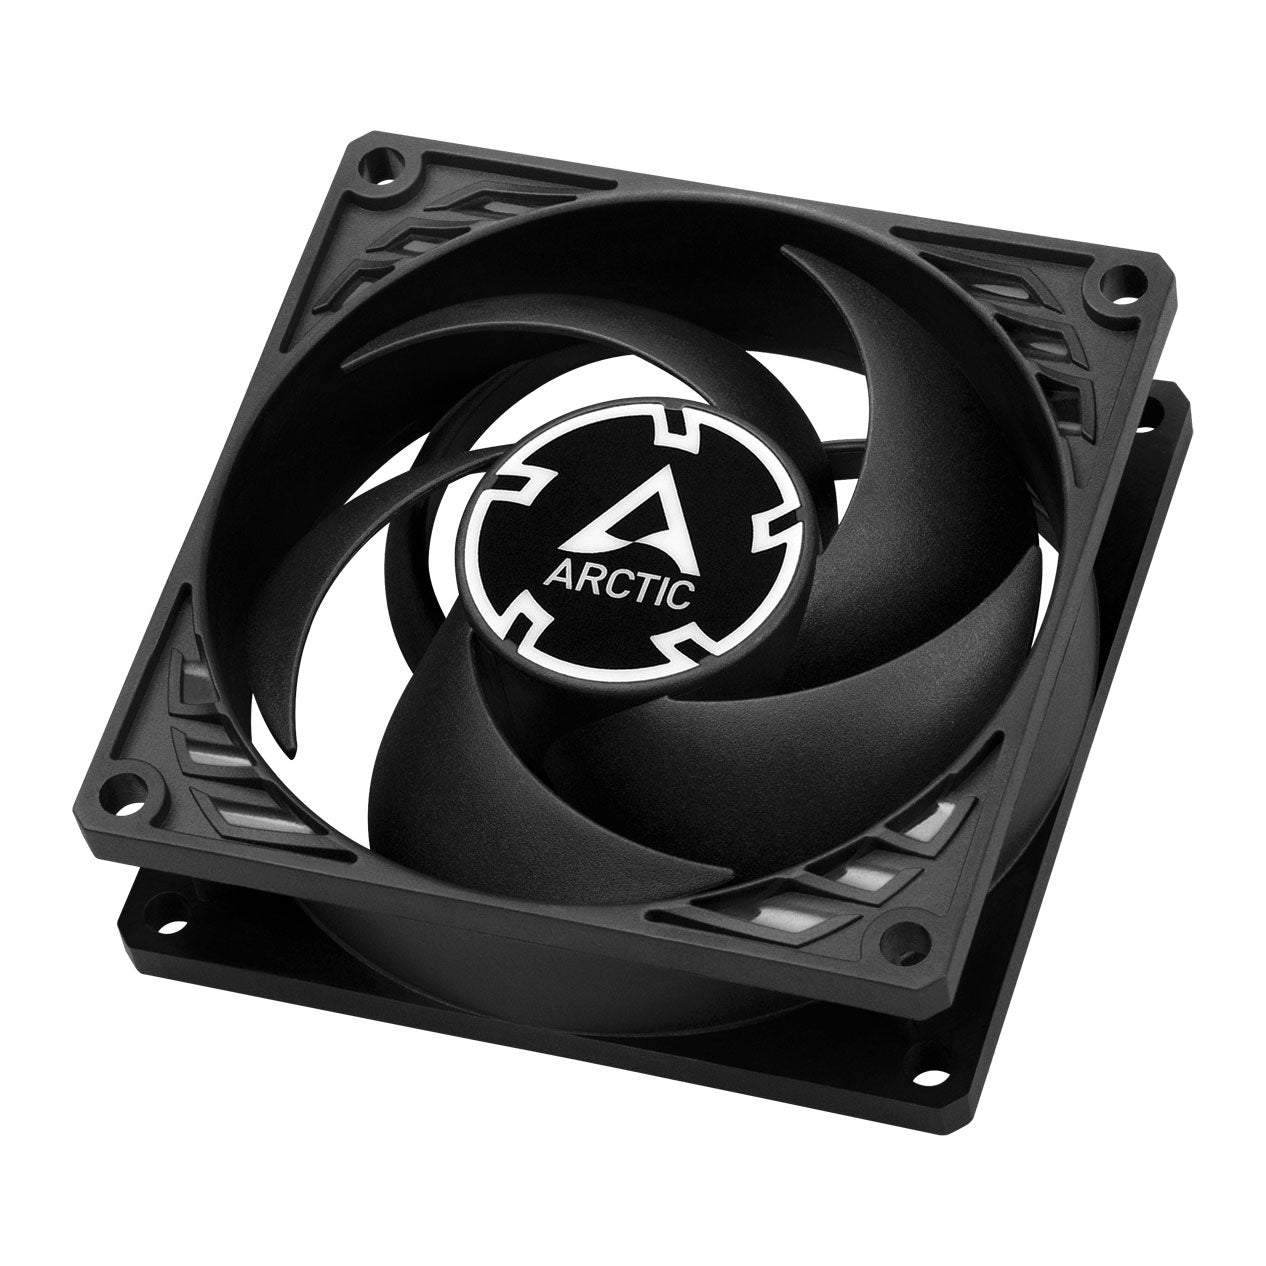 Arctic P8 Black 80mm Pressure Optimised Fan, Fluid Dynamic Bearing, Up to 3000rpm, 23.4CFM Airflow, 3-Pin